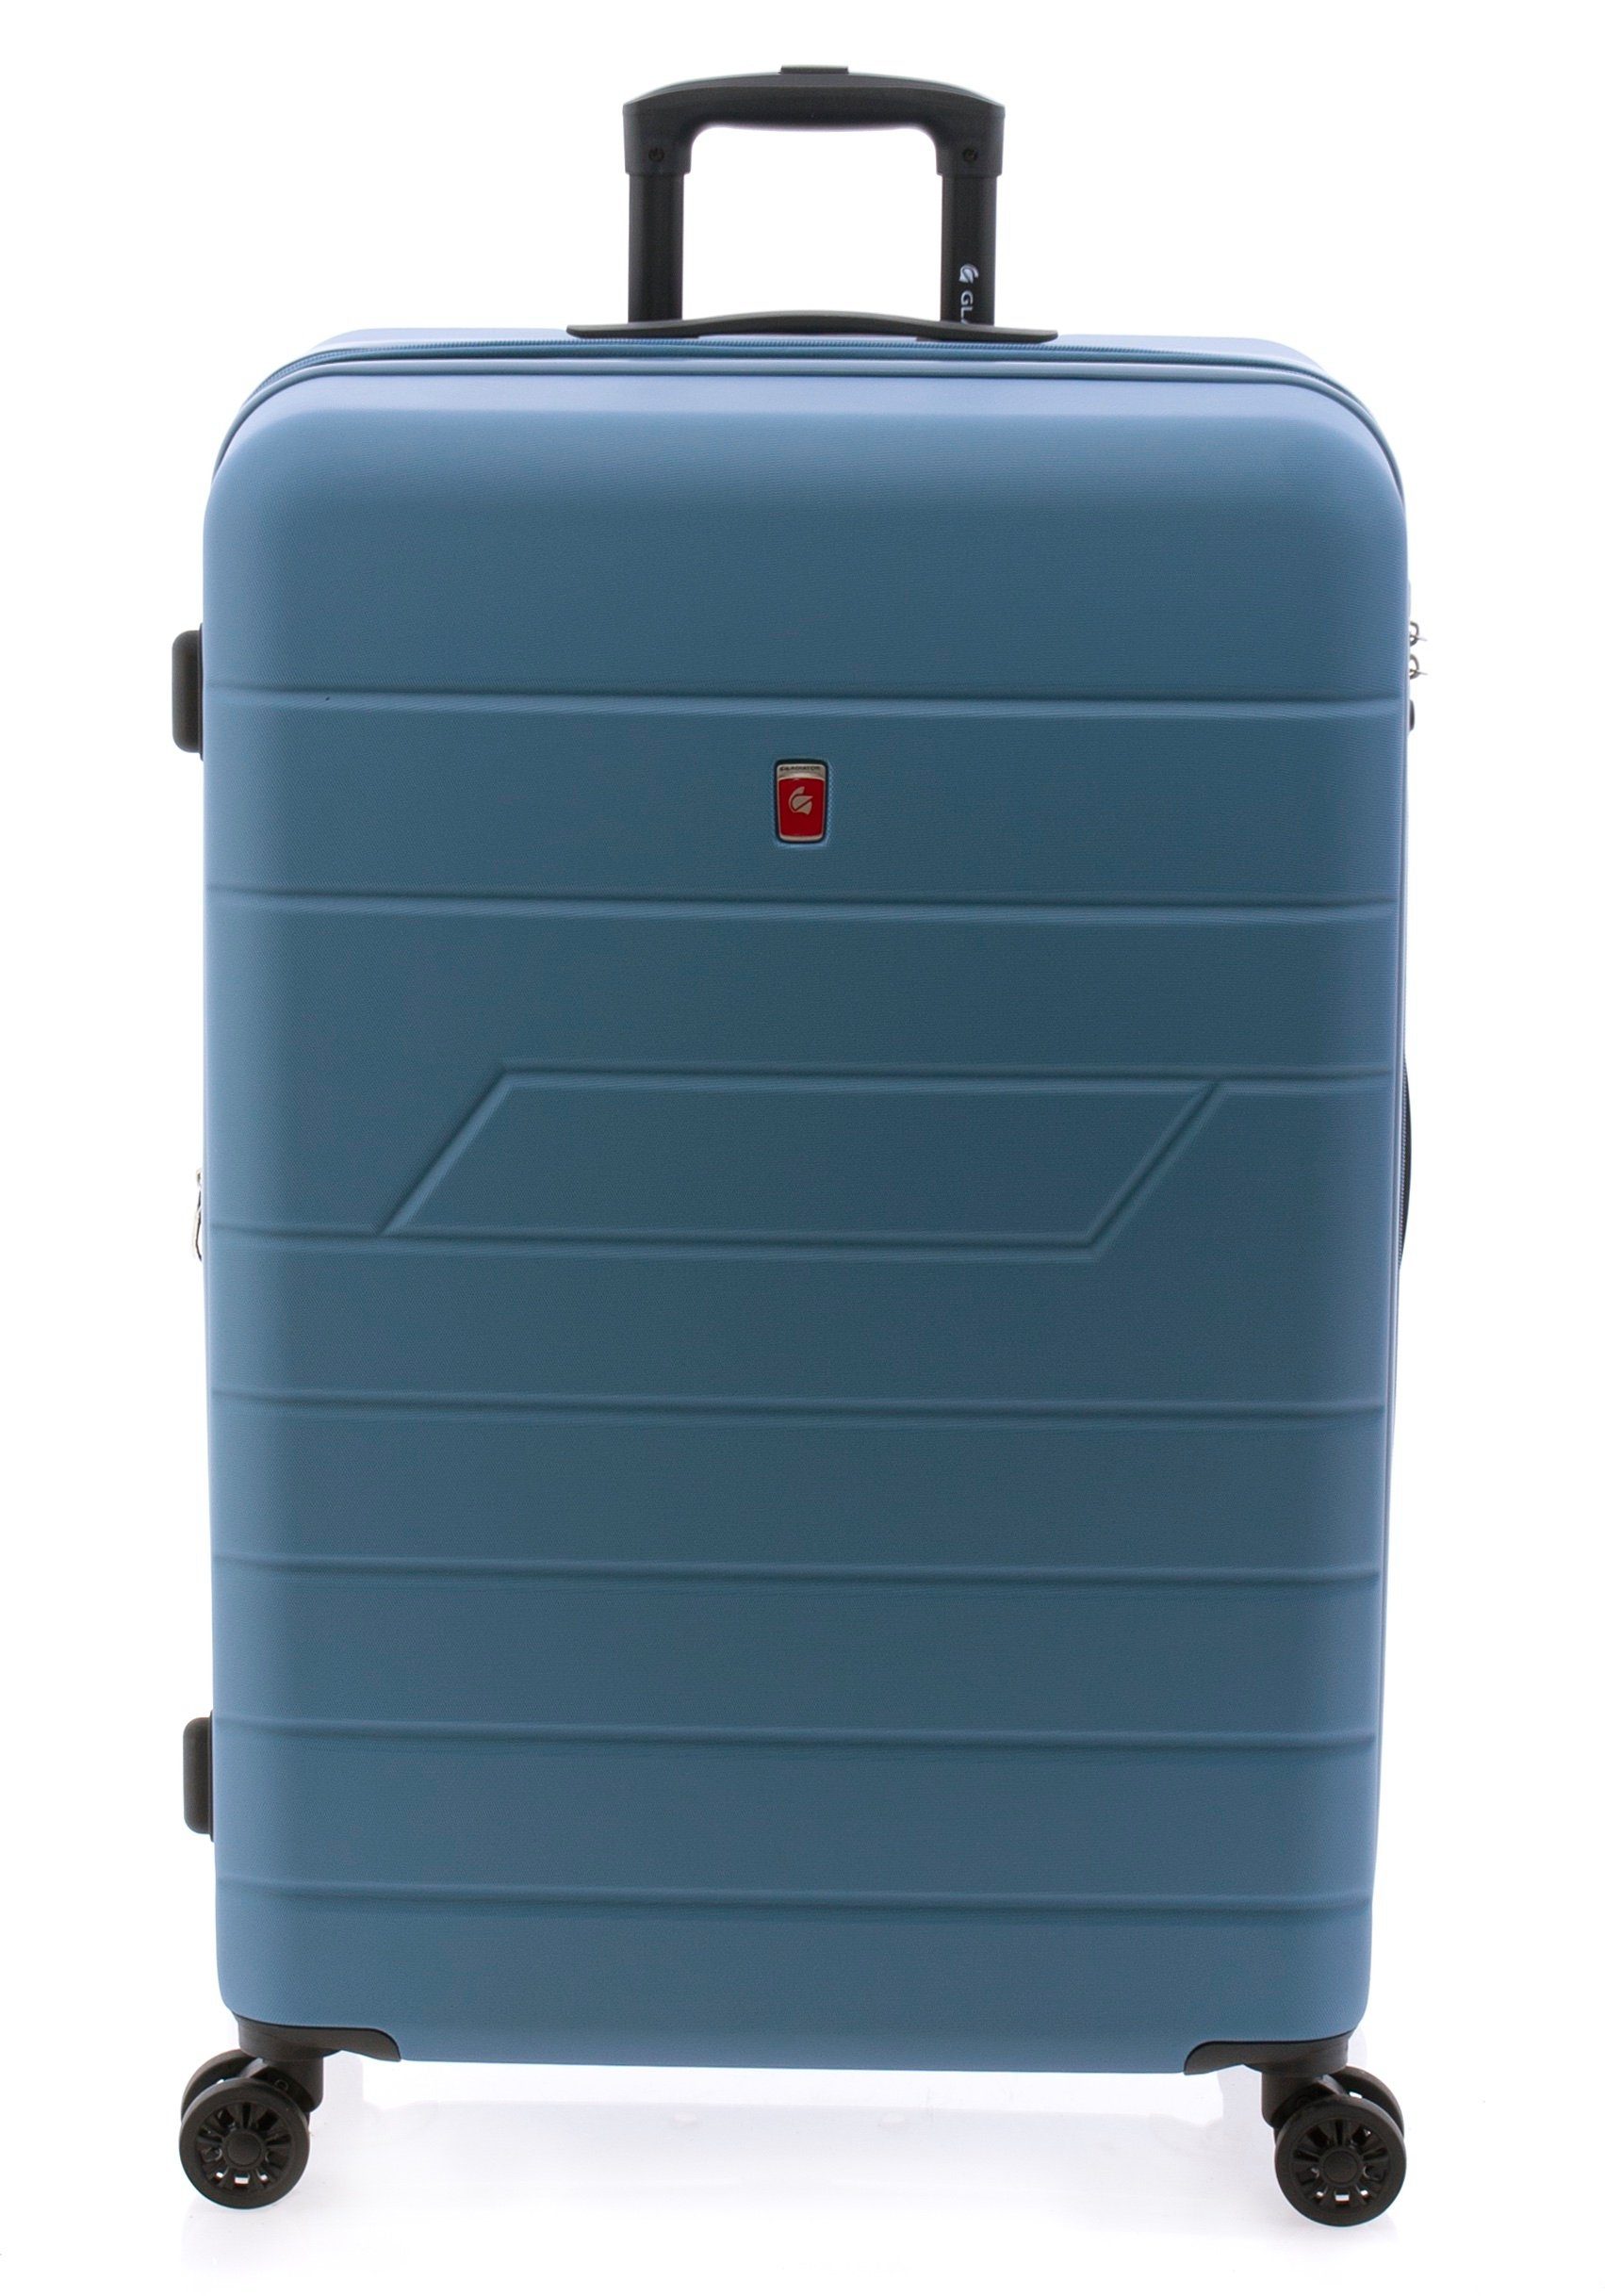 cm, Farben: schwarz, Dehnfalte, Doppel-Rollen, blau, 75 grün GLADIATOR 4 TSA-Schloss, Hartschalen-Trolley Koffer rot, -